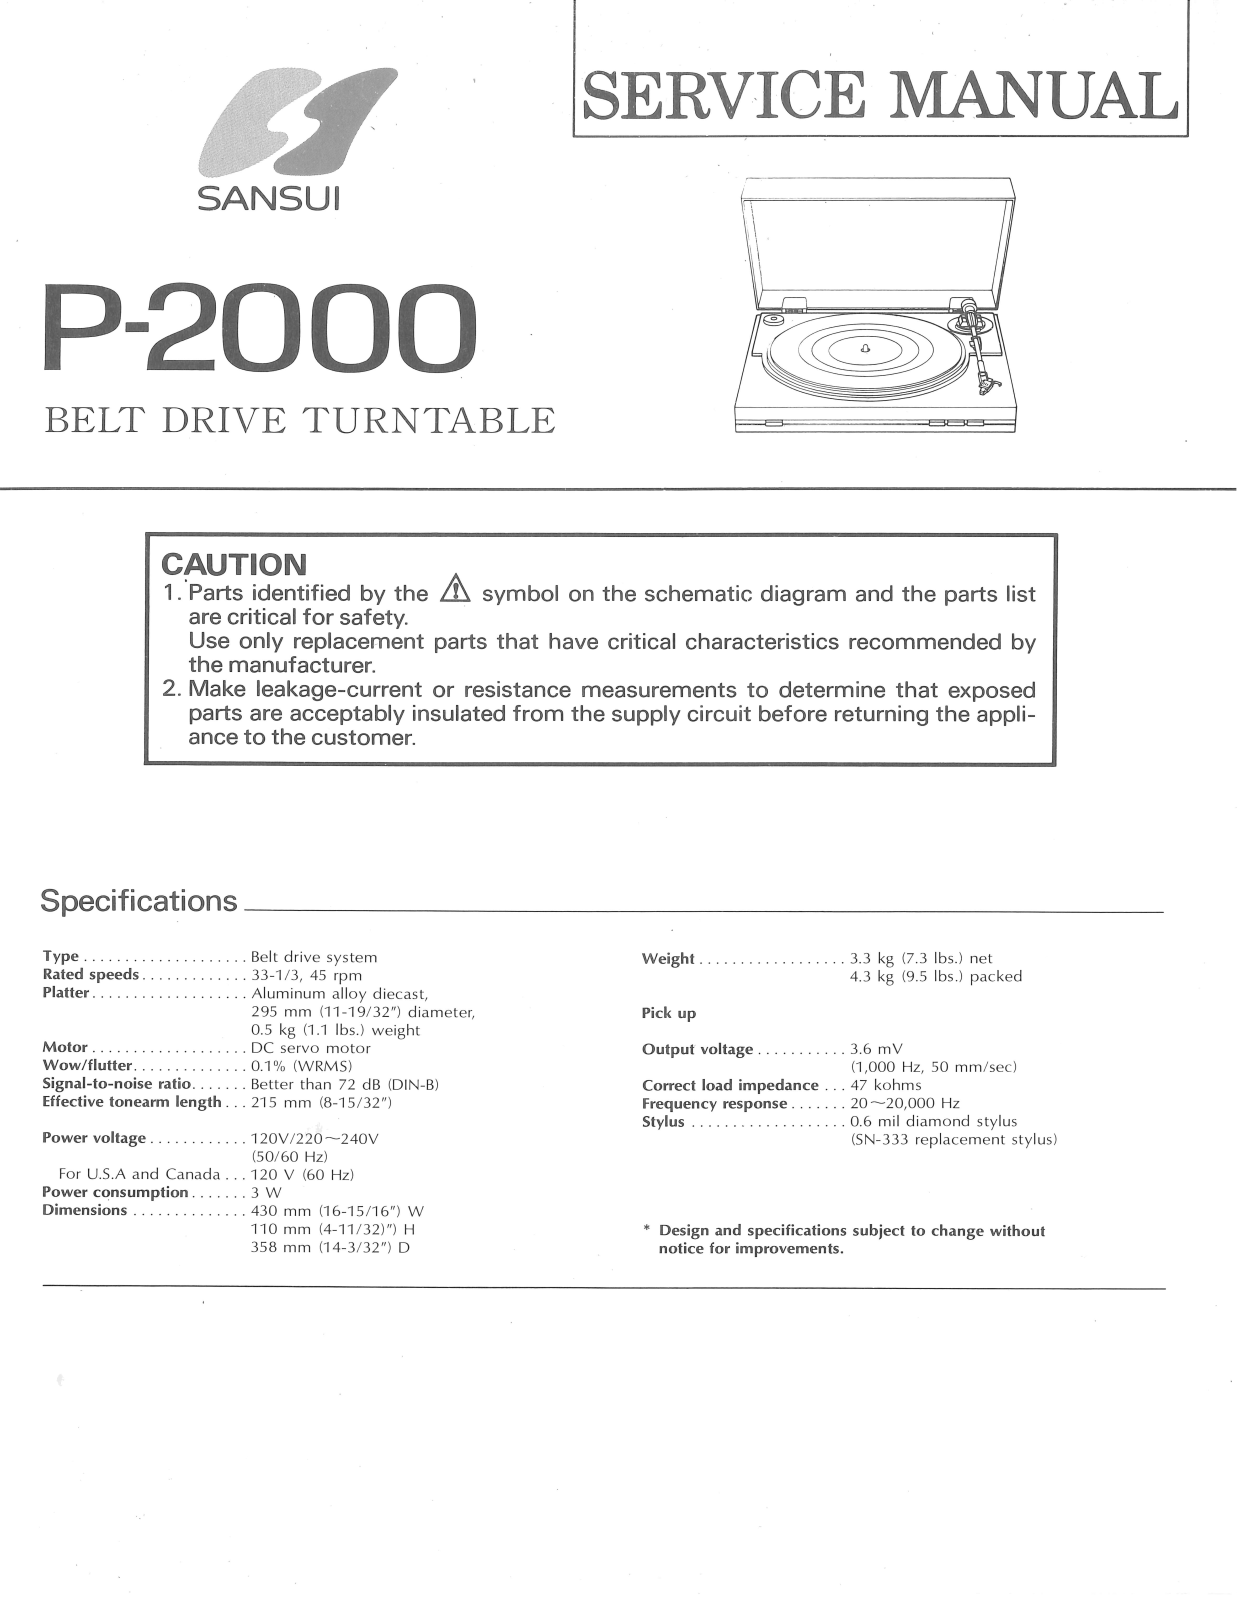 Sansui P-2000 Service Manual